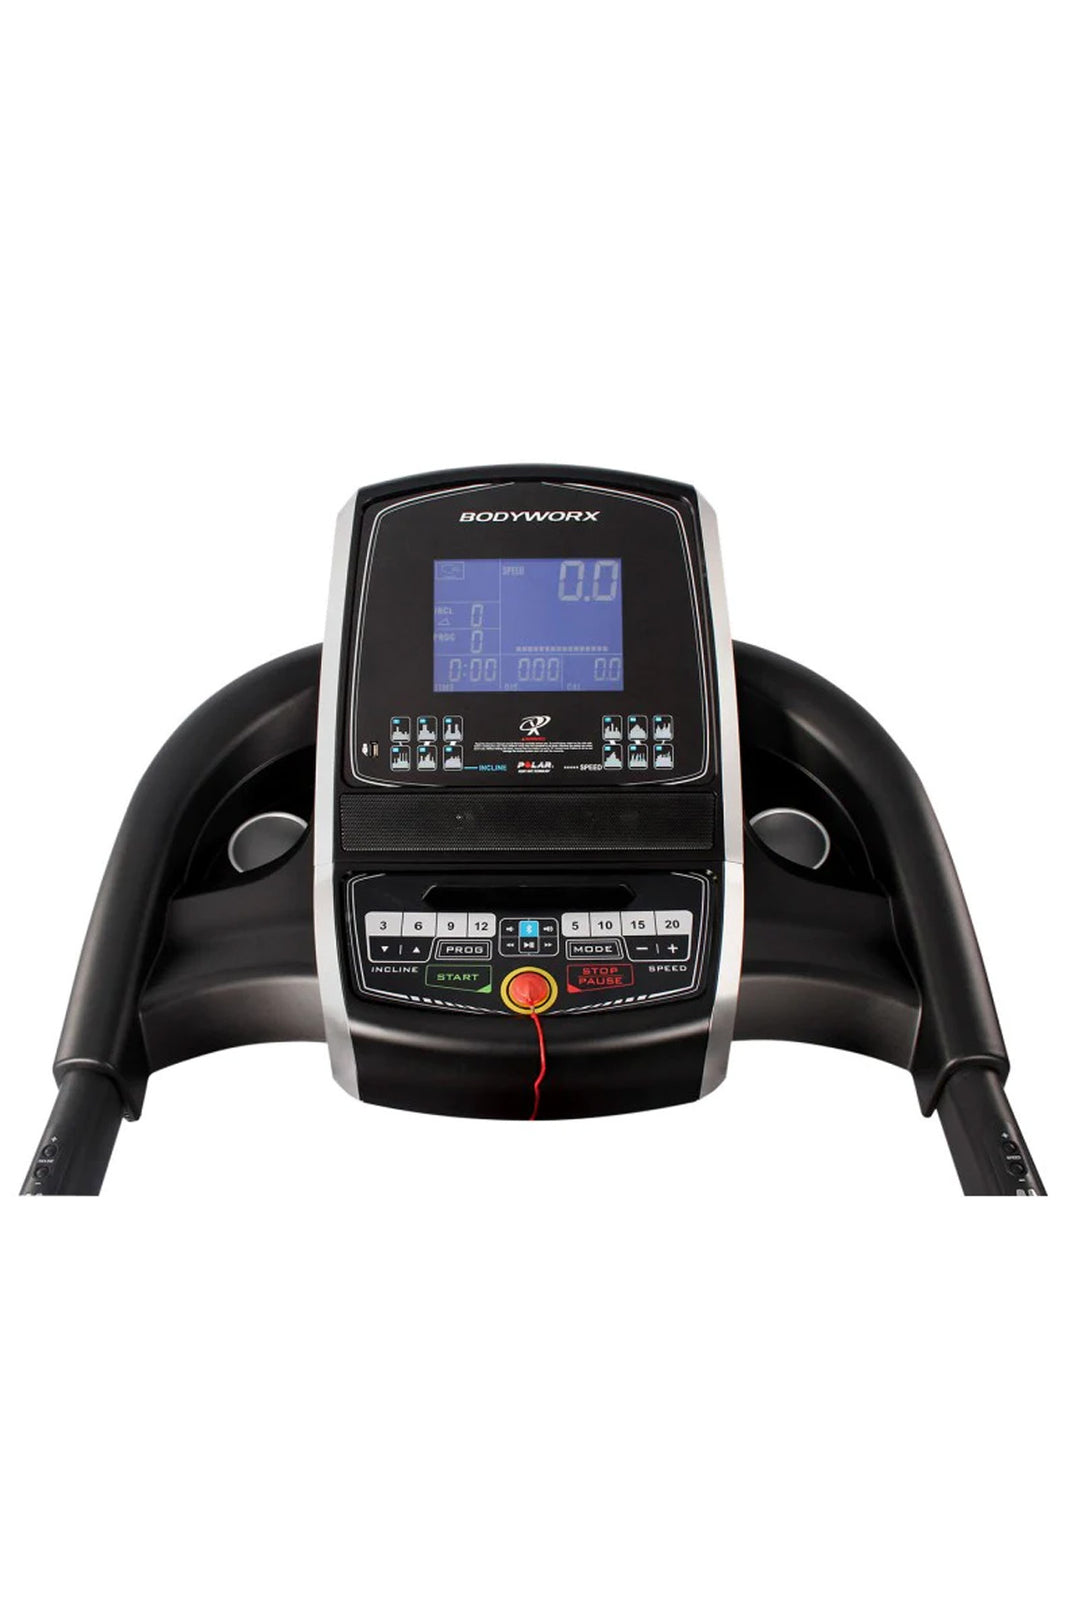 Bodyworx Challenger 300 Treadmill console screen